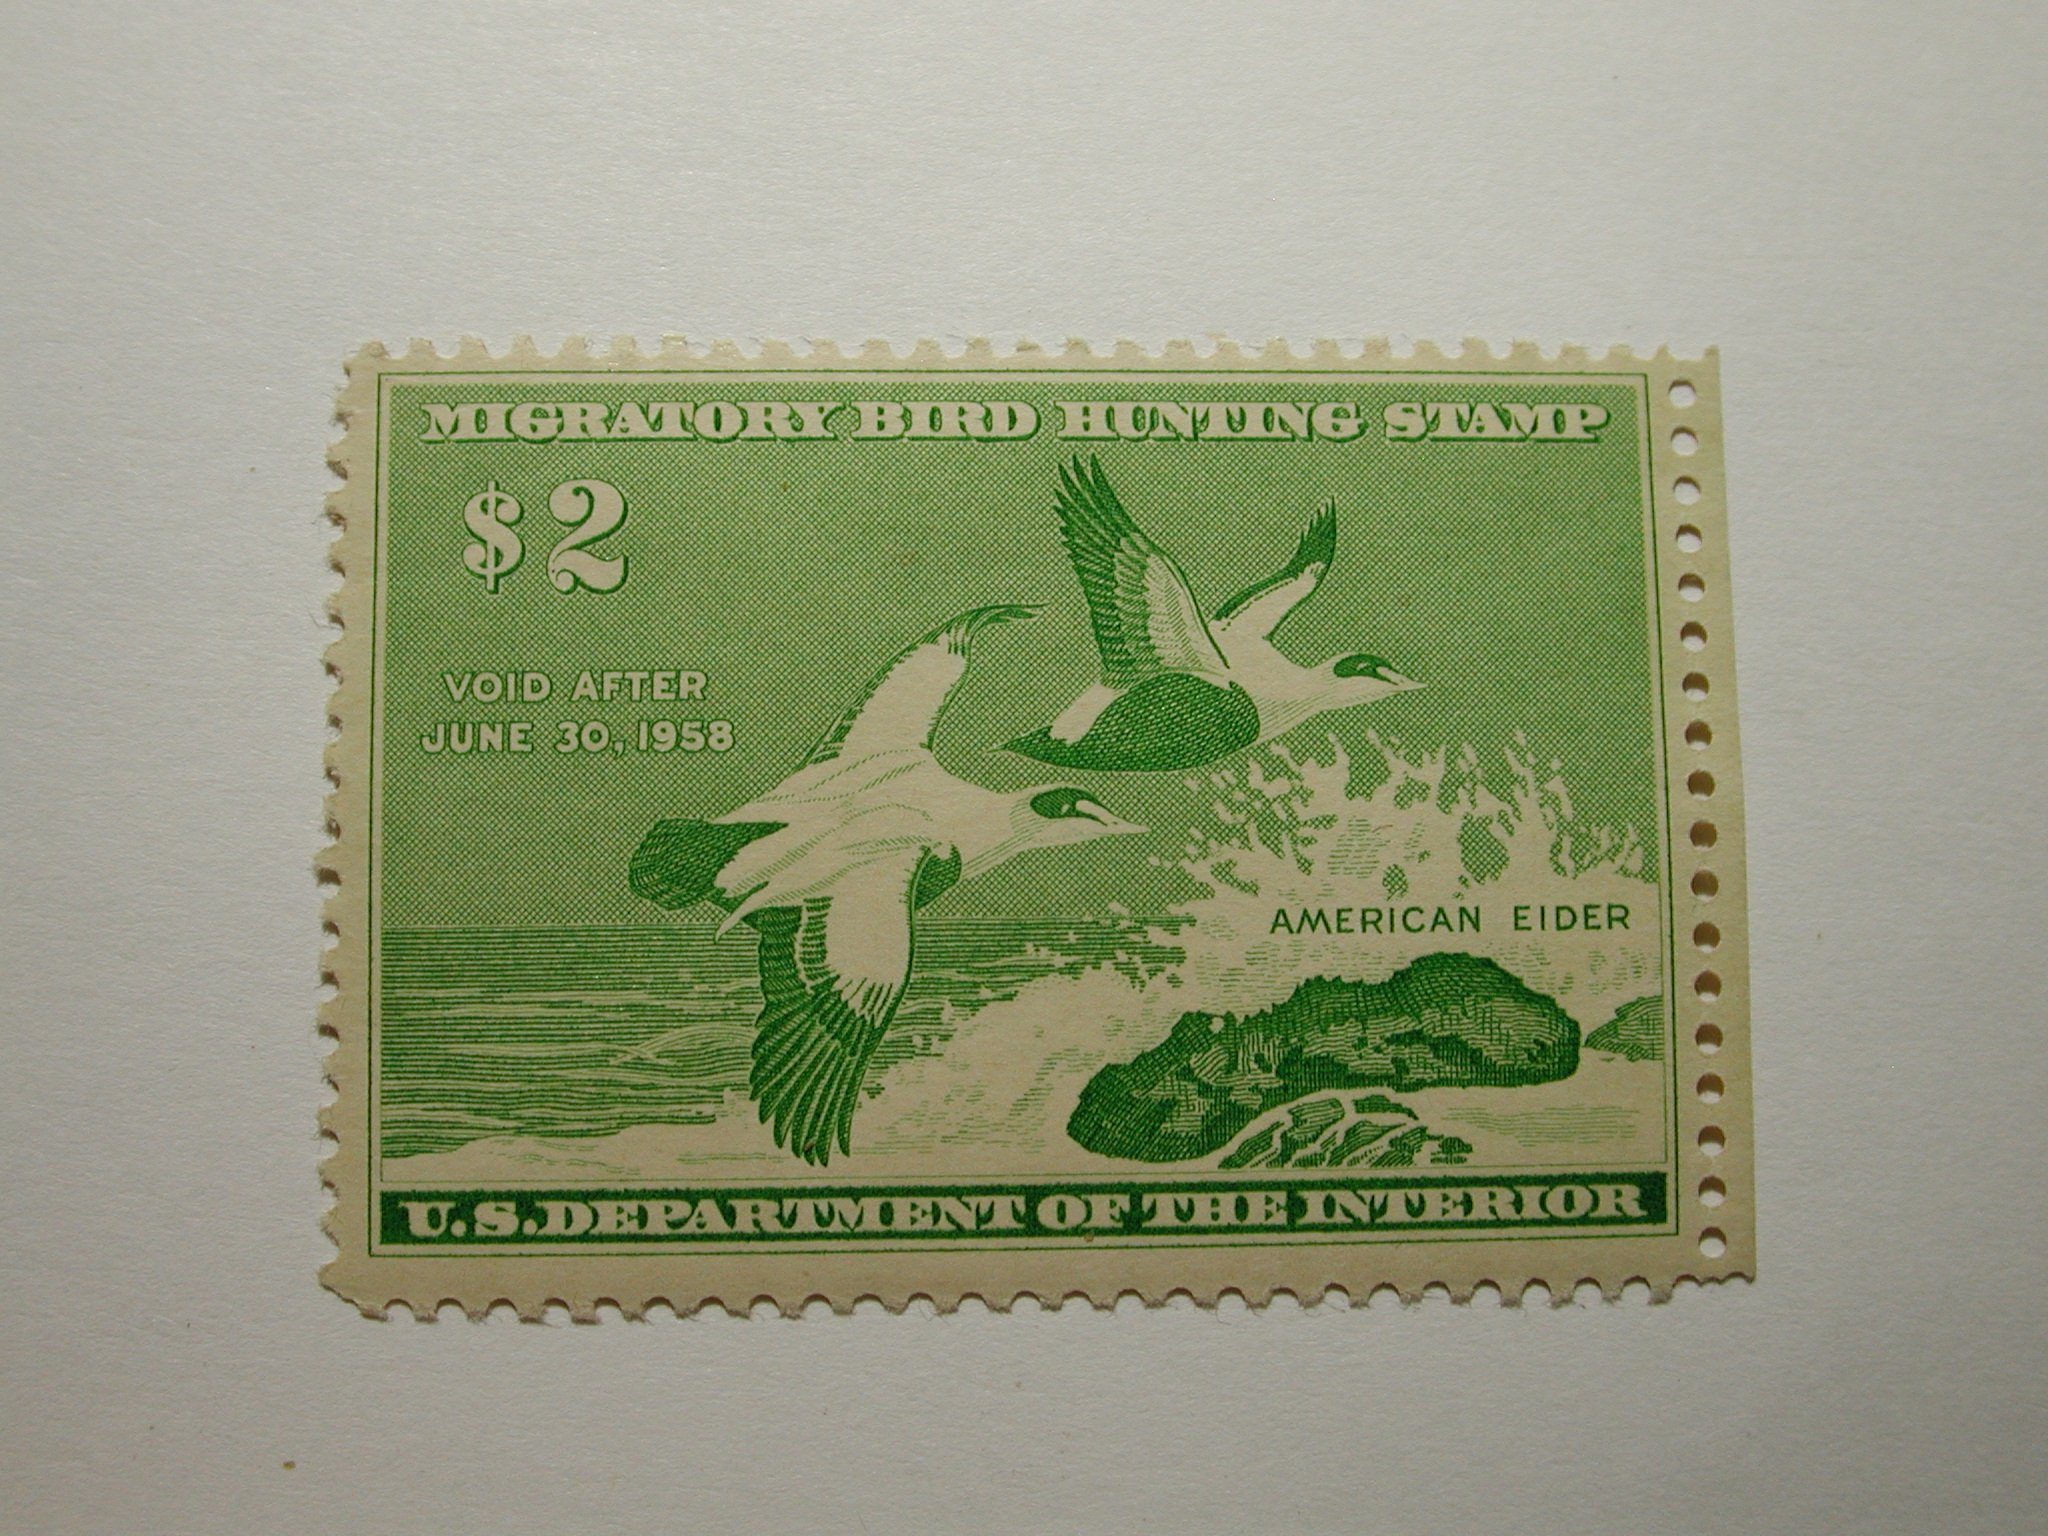 US Department of Interior Scott #RW24 $2 American Eider 1957, M/VLH -Migratory Bird Hunting Stamp